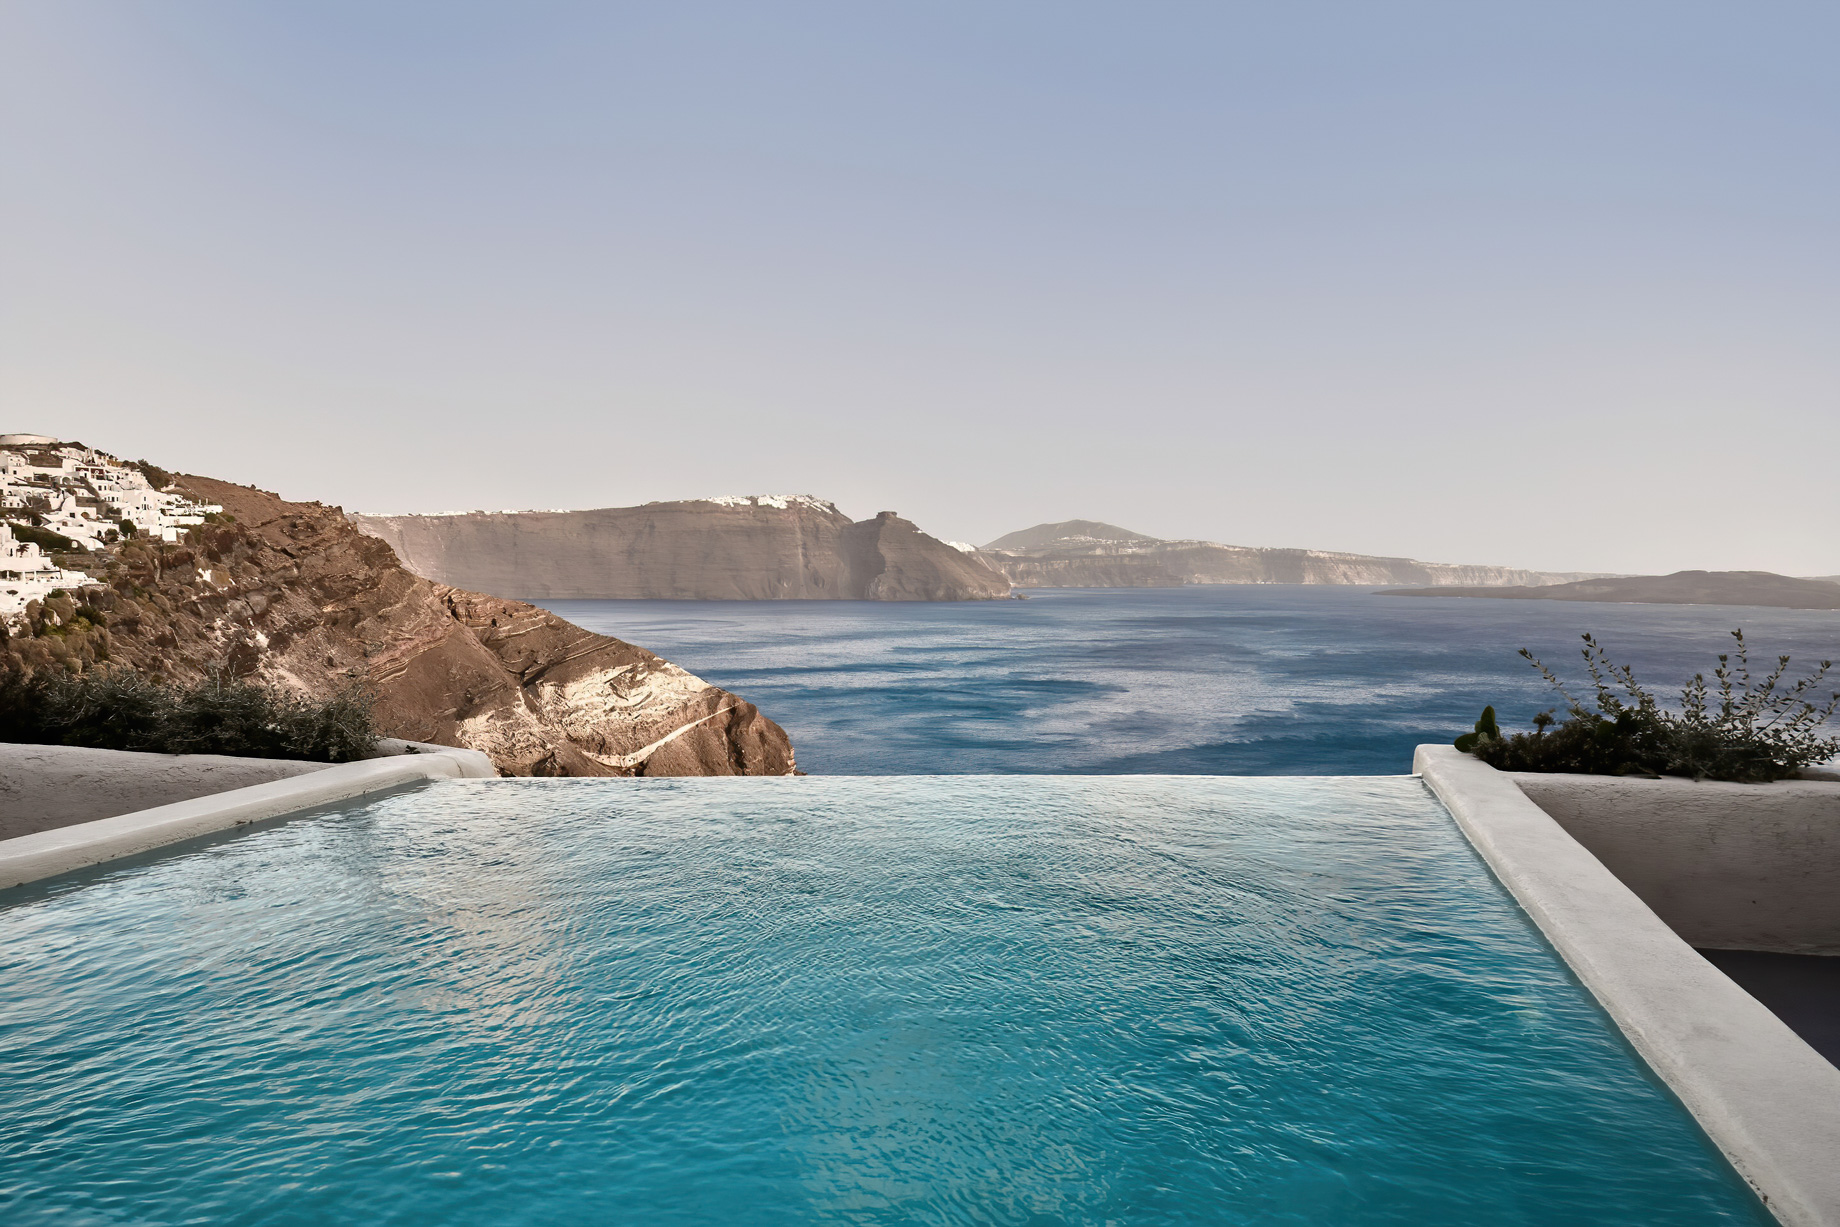 Mystique Hotel Santorini – Oia, Santorini Island, Greece – Holistic Villa Infinity Pool Ocean View